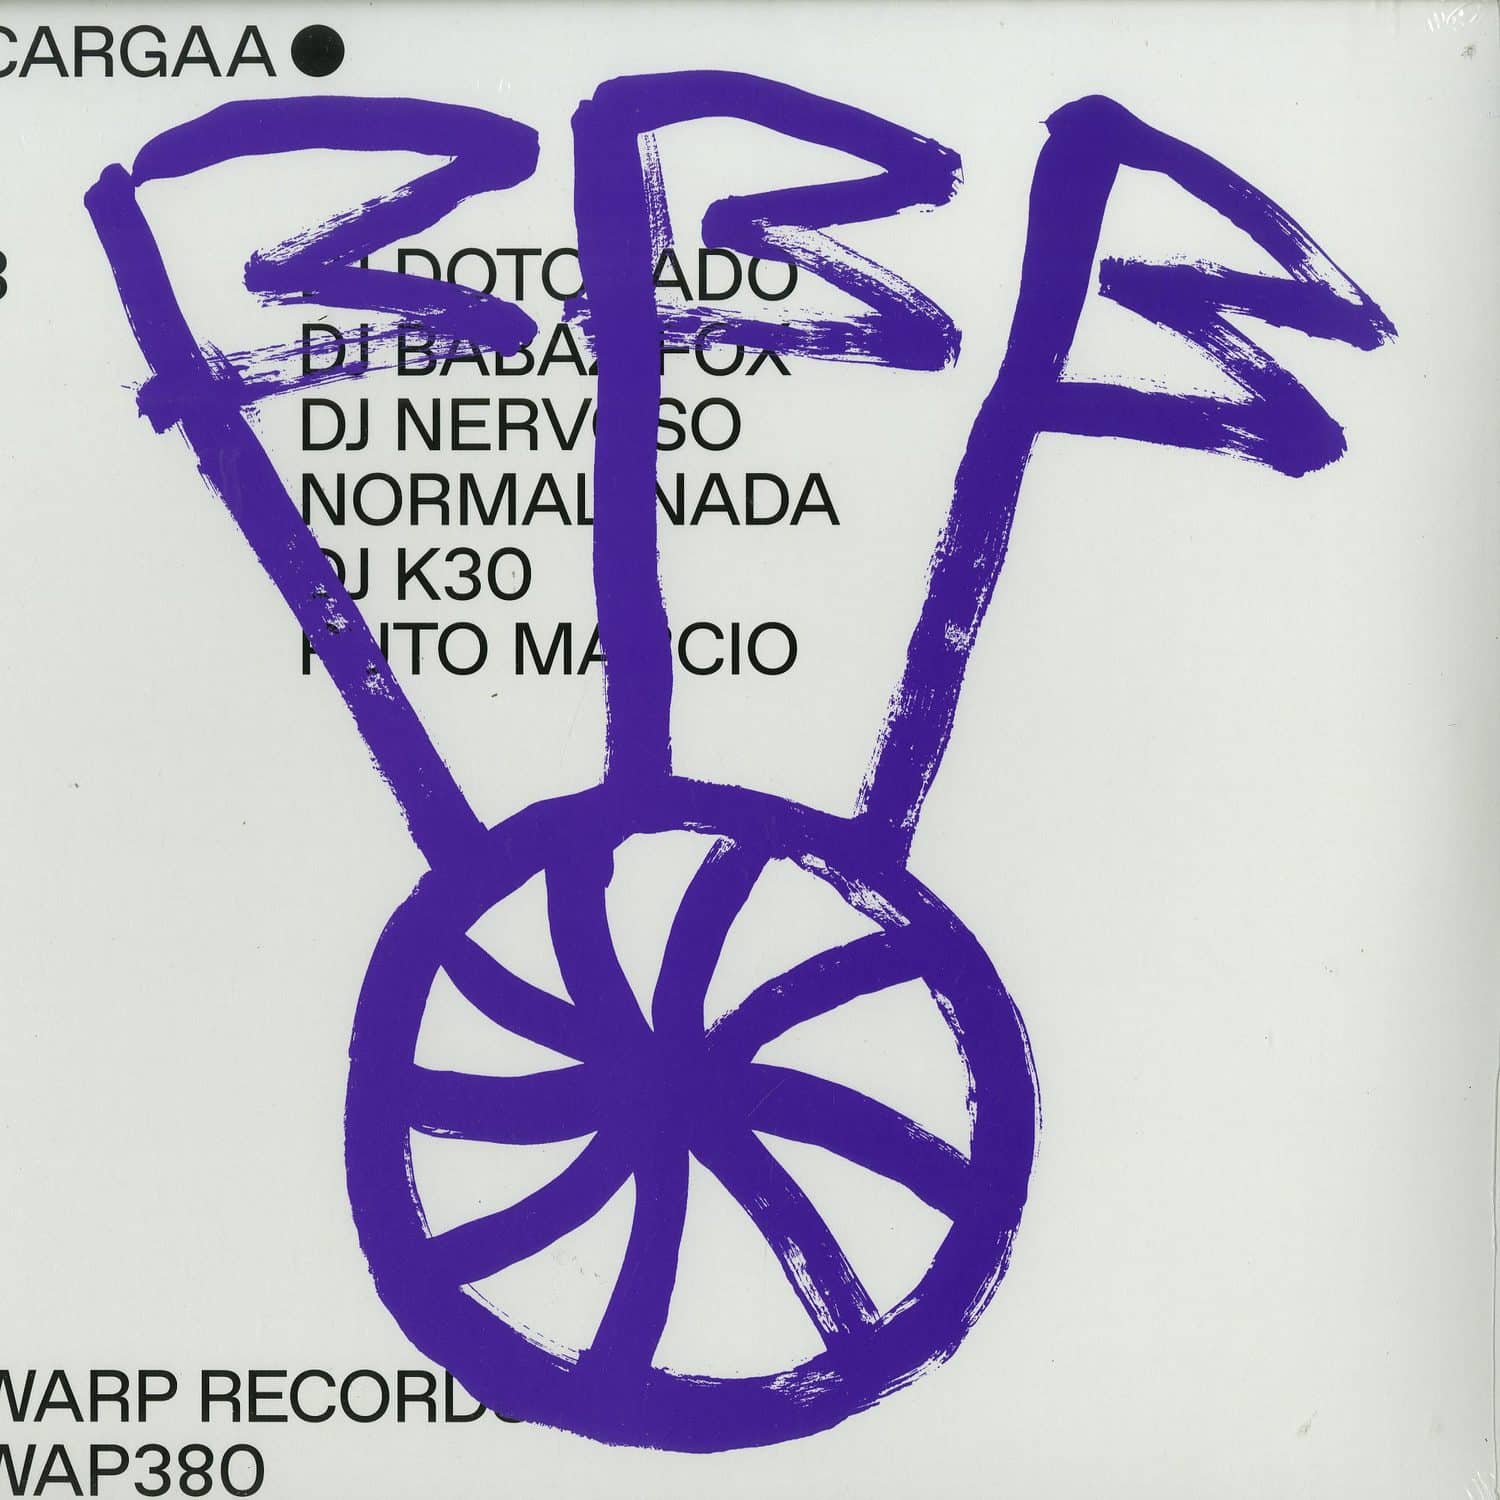 Various Artists - CARGAA 3 